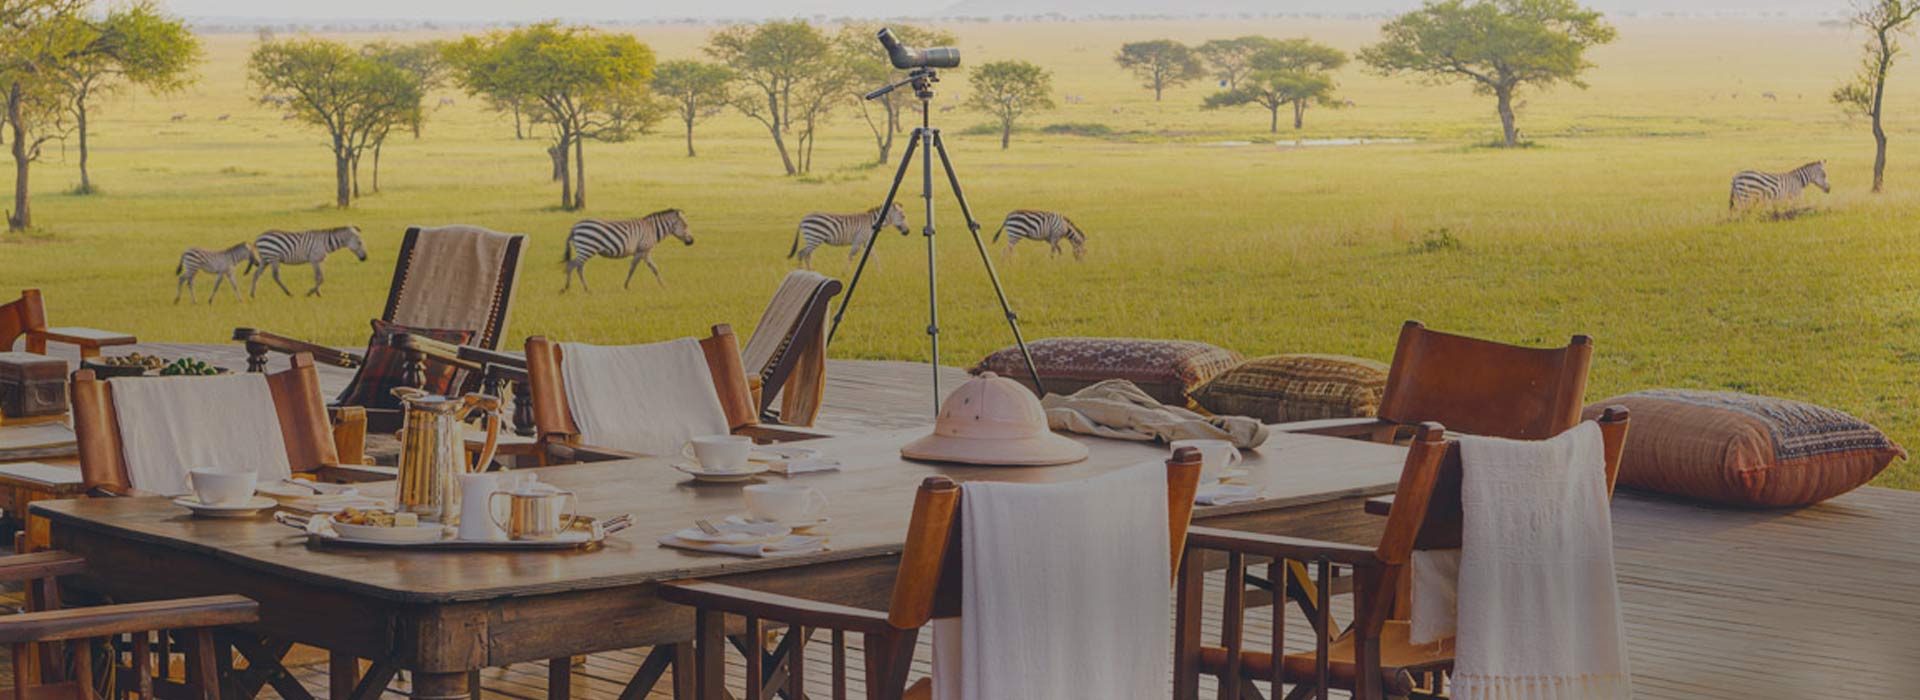 Tanzania Budget Camping Safari from Mwanza to Ngorongoro,Arusha